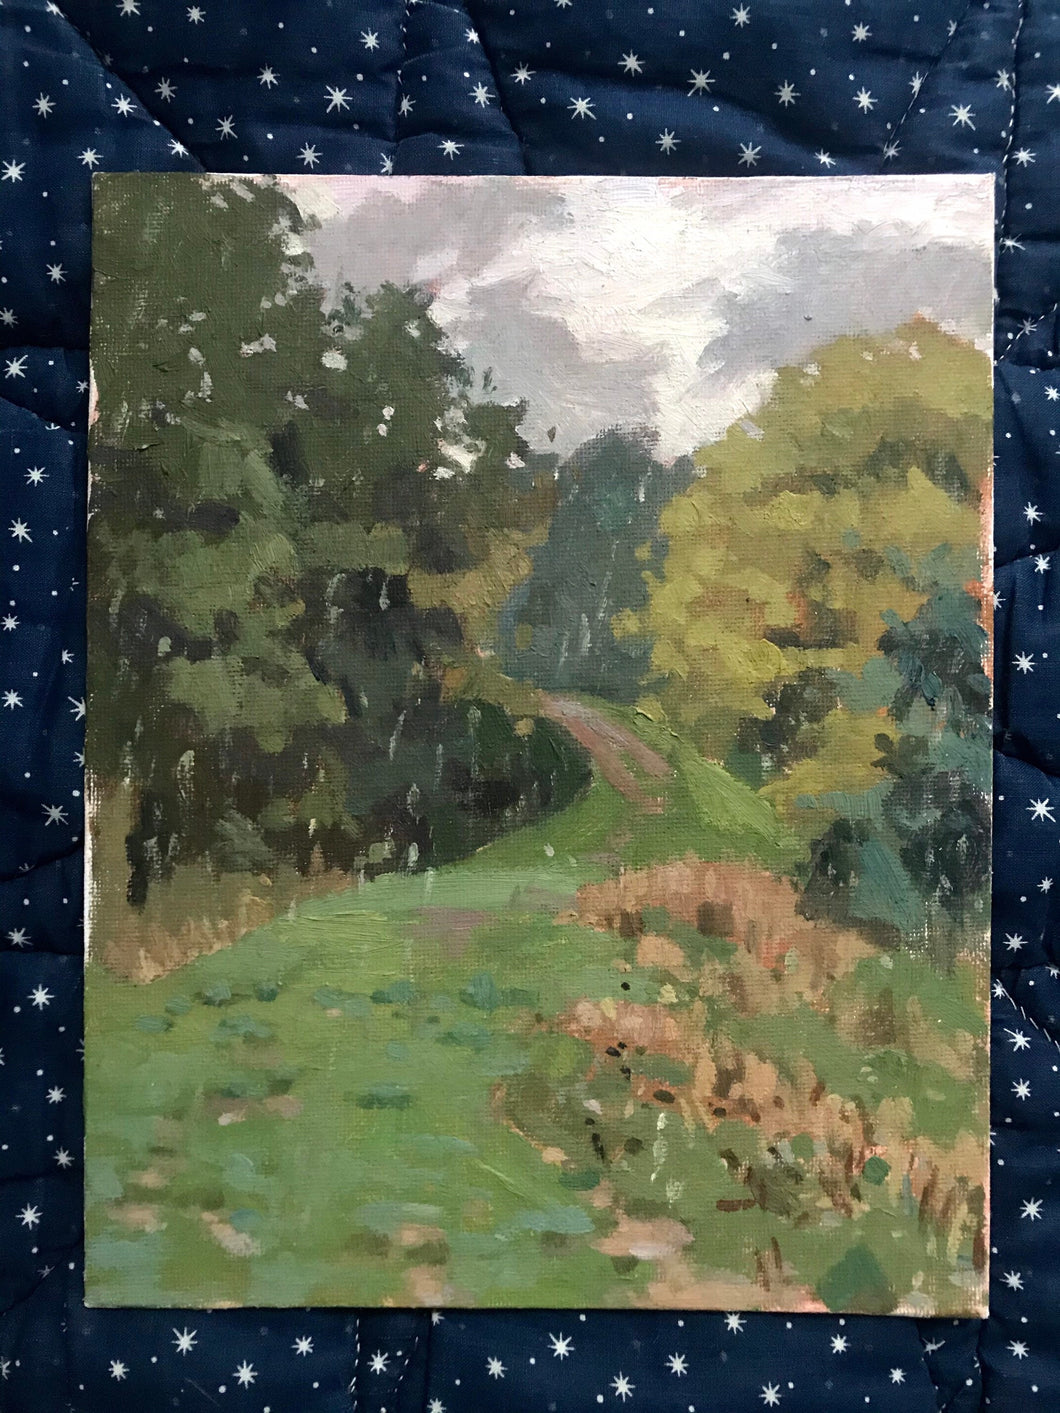 Hampstead Heath under the rain. Trees and grass Oil painting on panel. Original art London park lanscape painting. Plein air painting